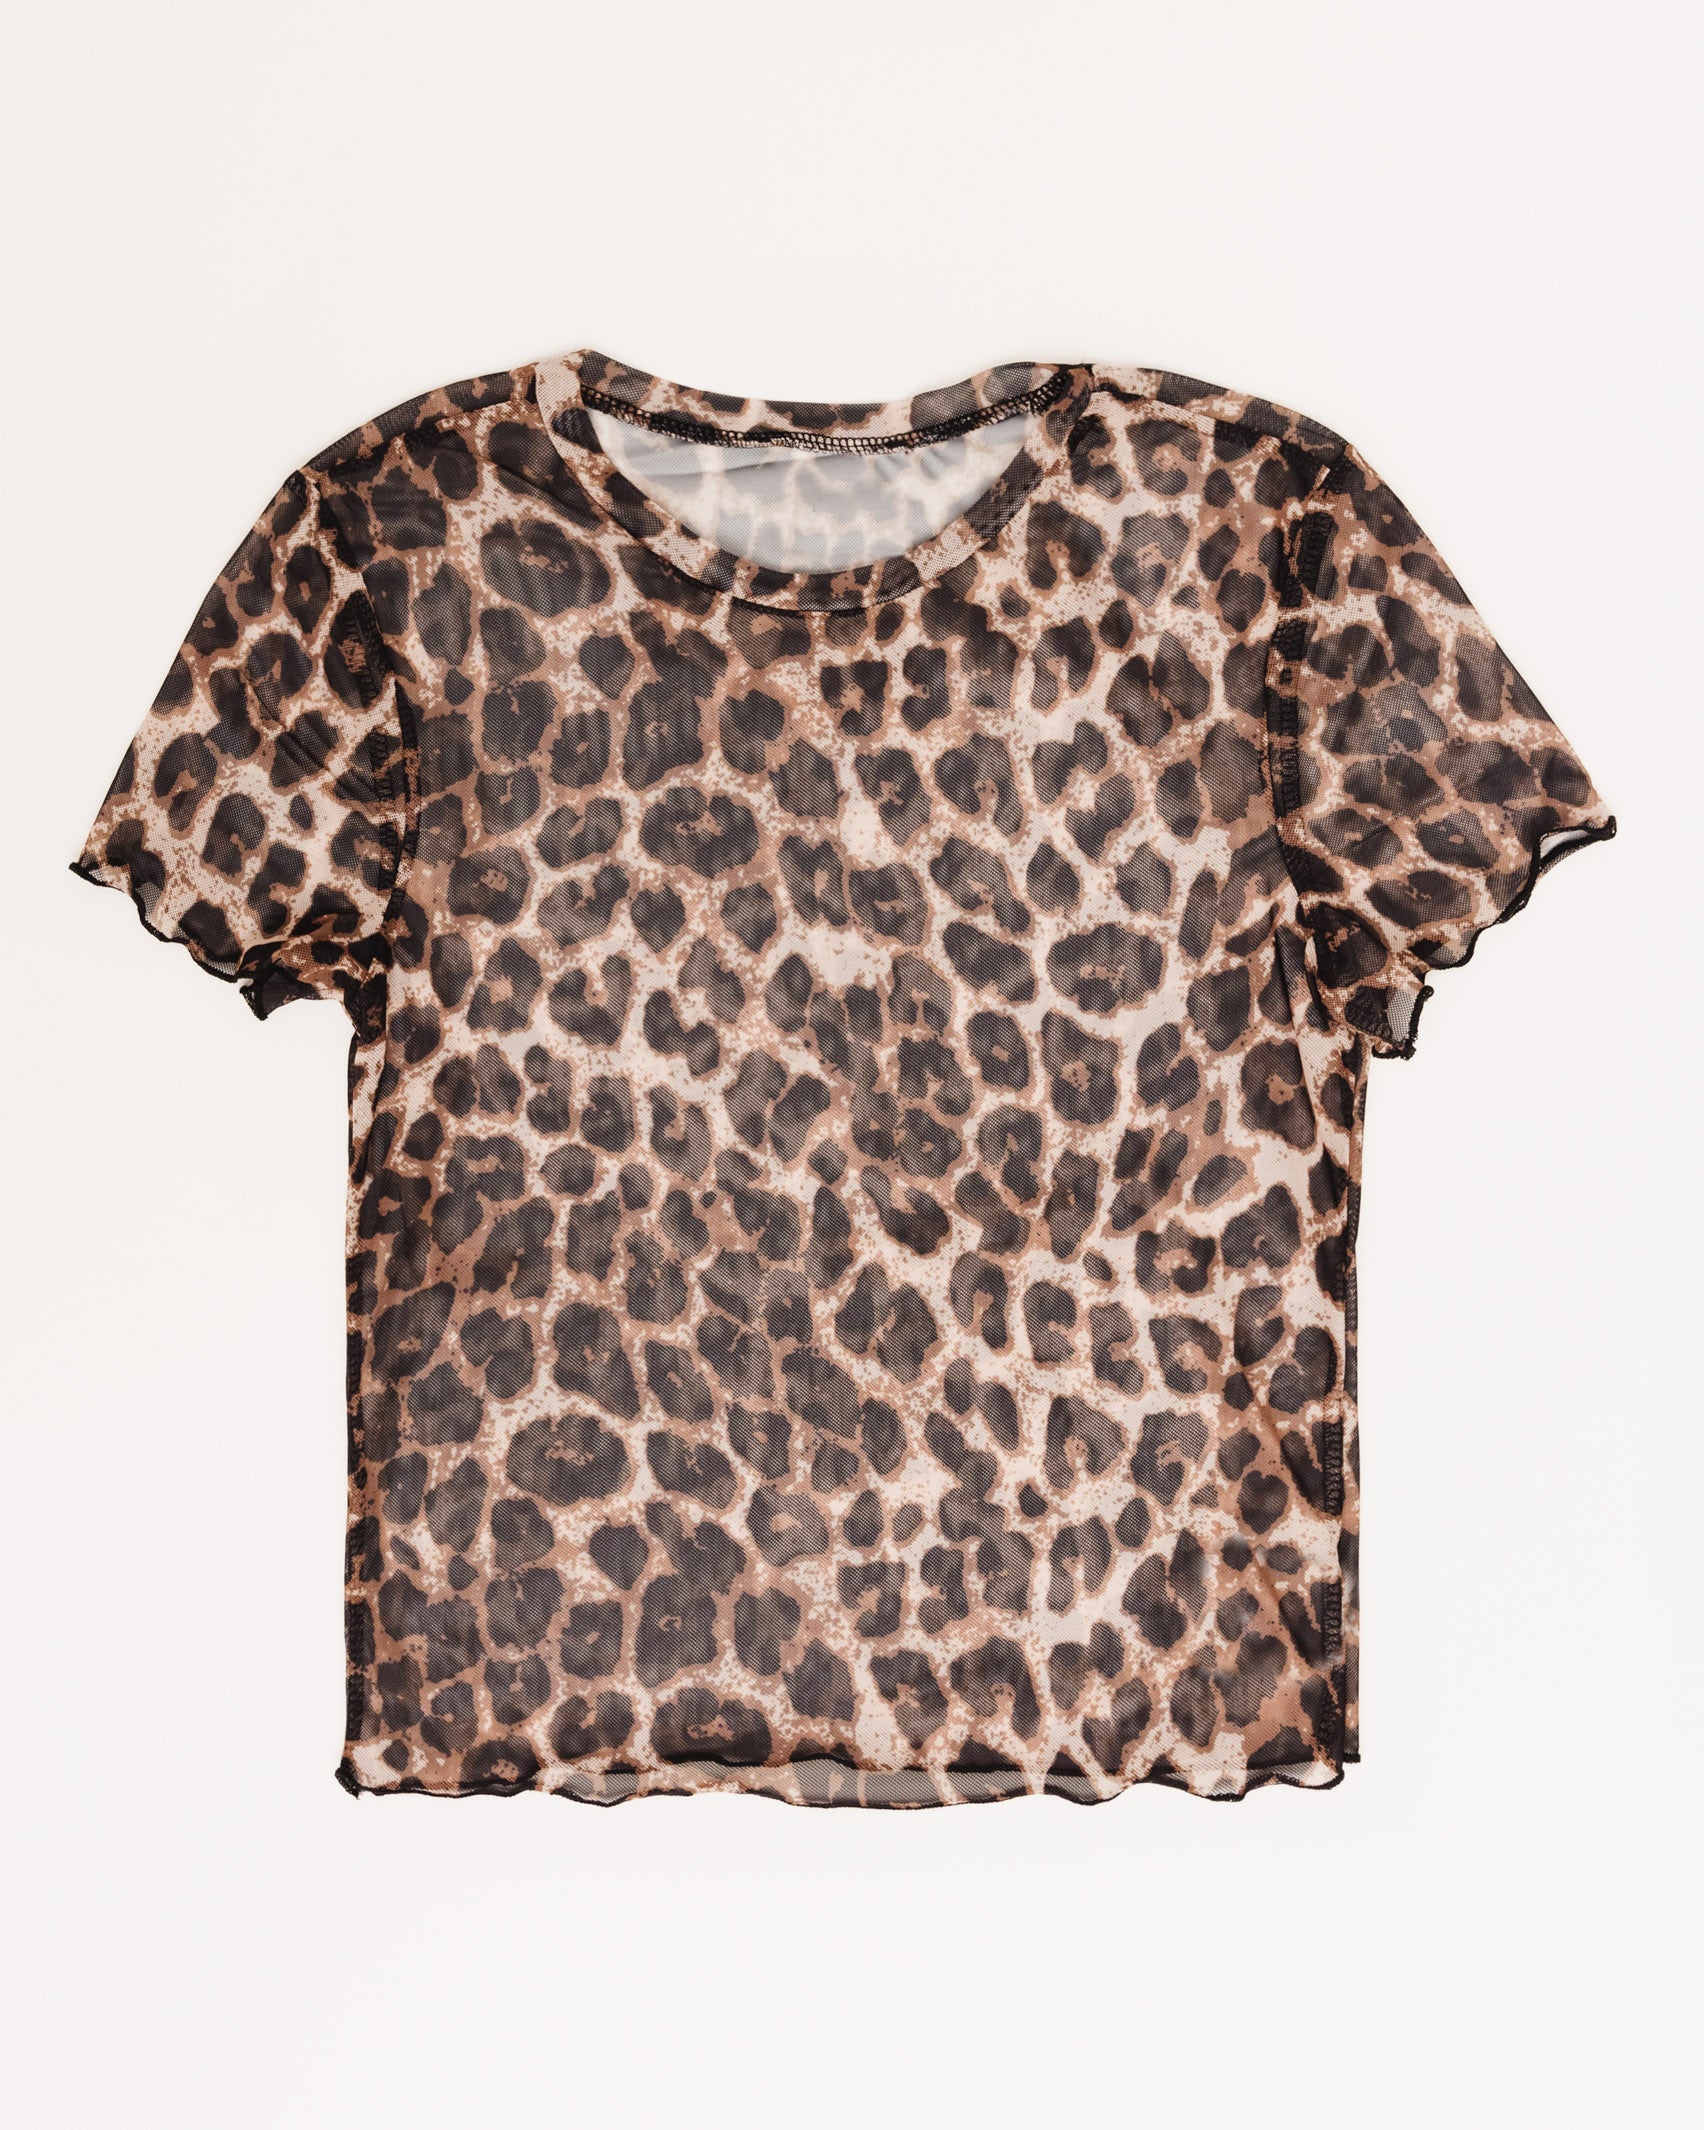 Mesh T-Shirt in Leoparden Muster - Broke + Schön